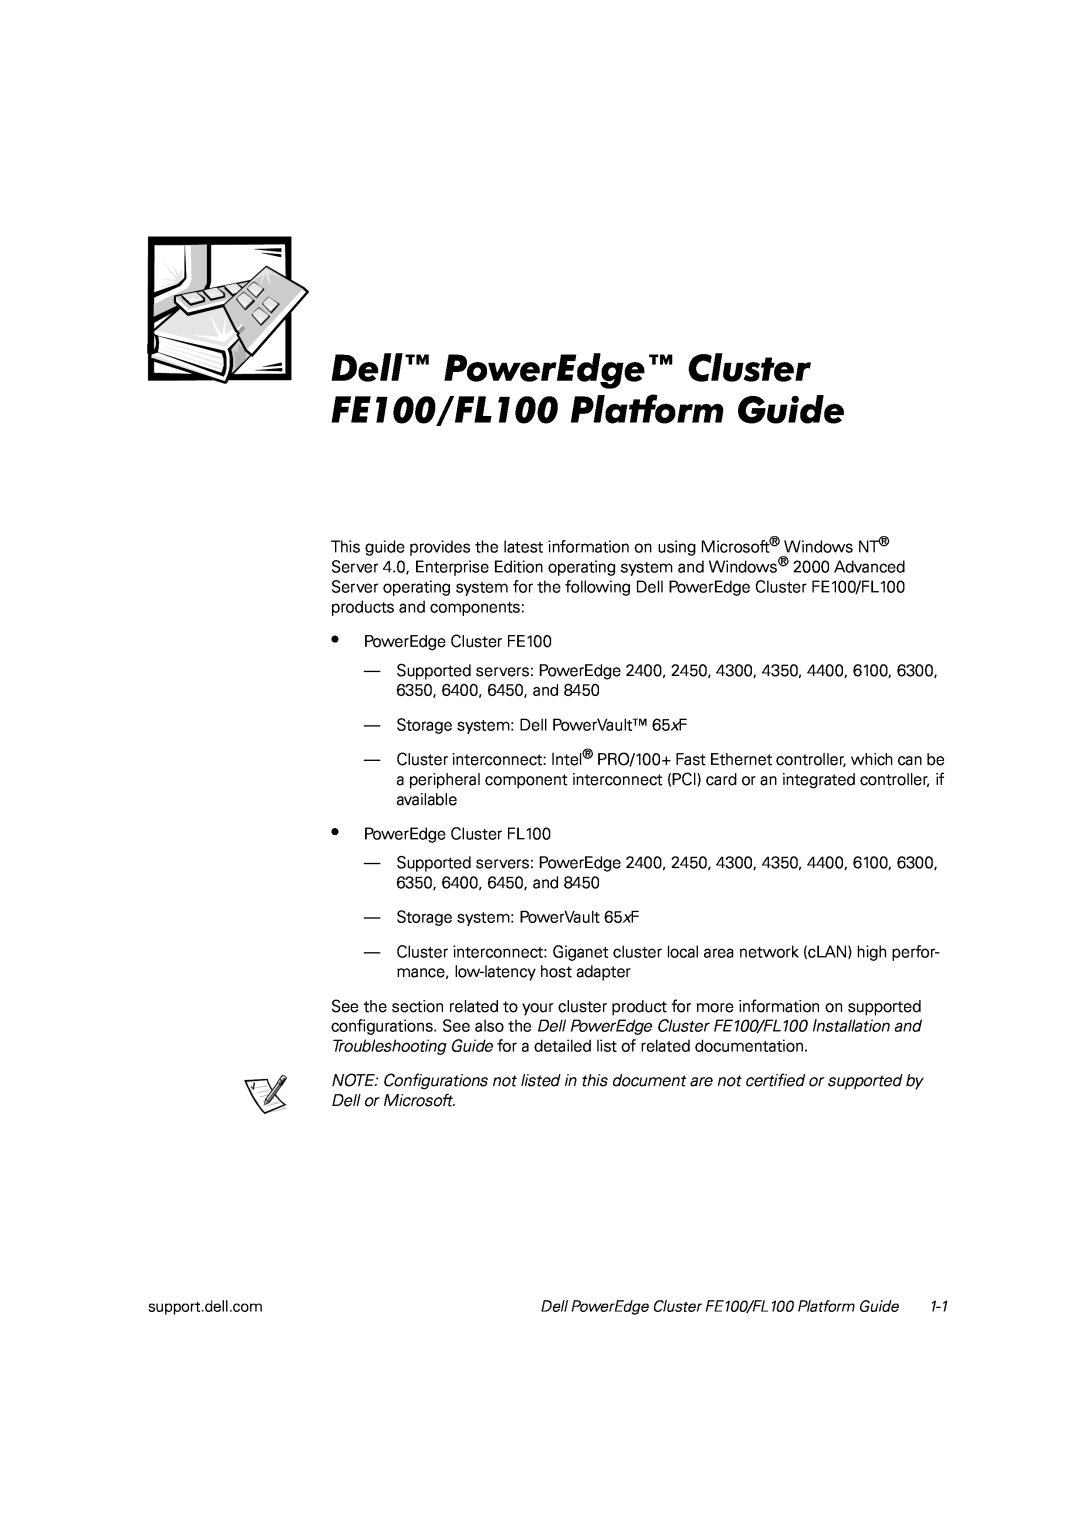 Dell manual Dell PowerEdge Cluster FE100/FL100 Platform Guide, Dell or Microsoft 